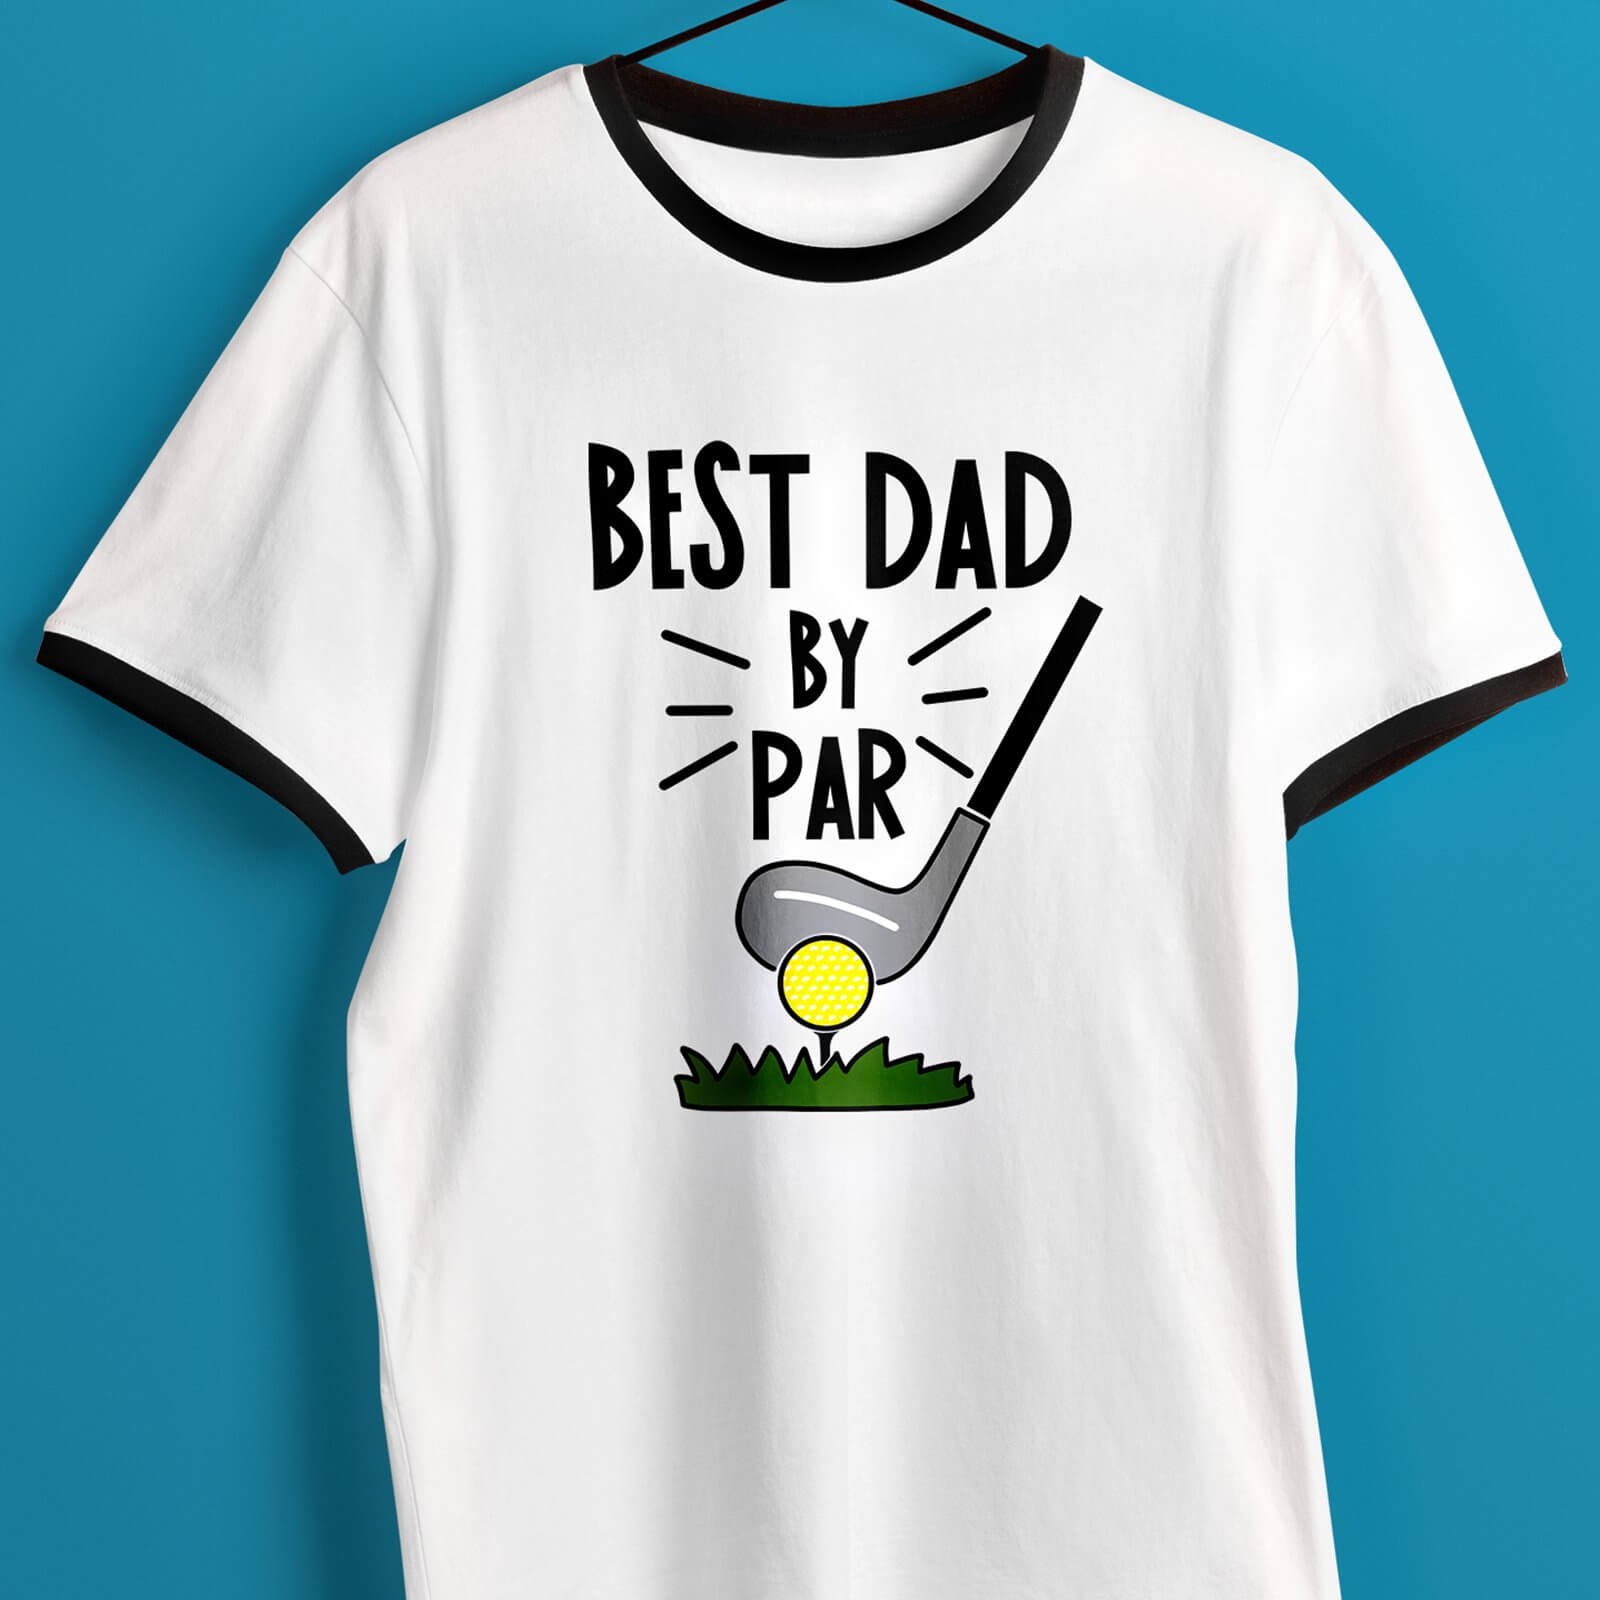 Inscription "Best dad by par" on the white t-shirt.